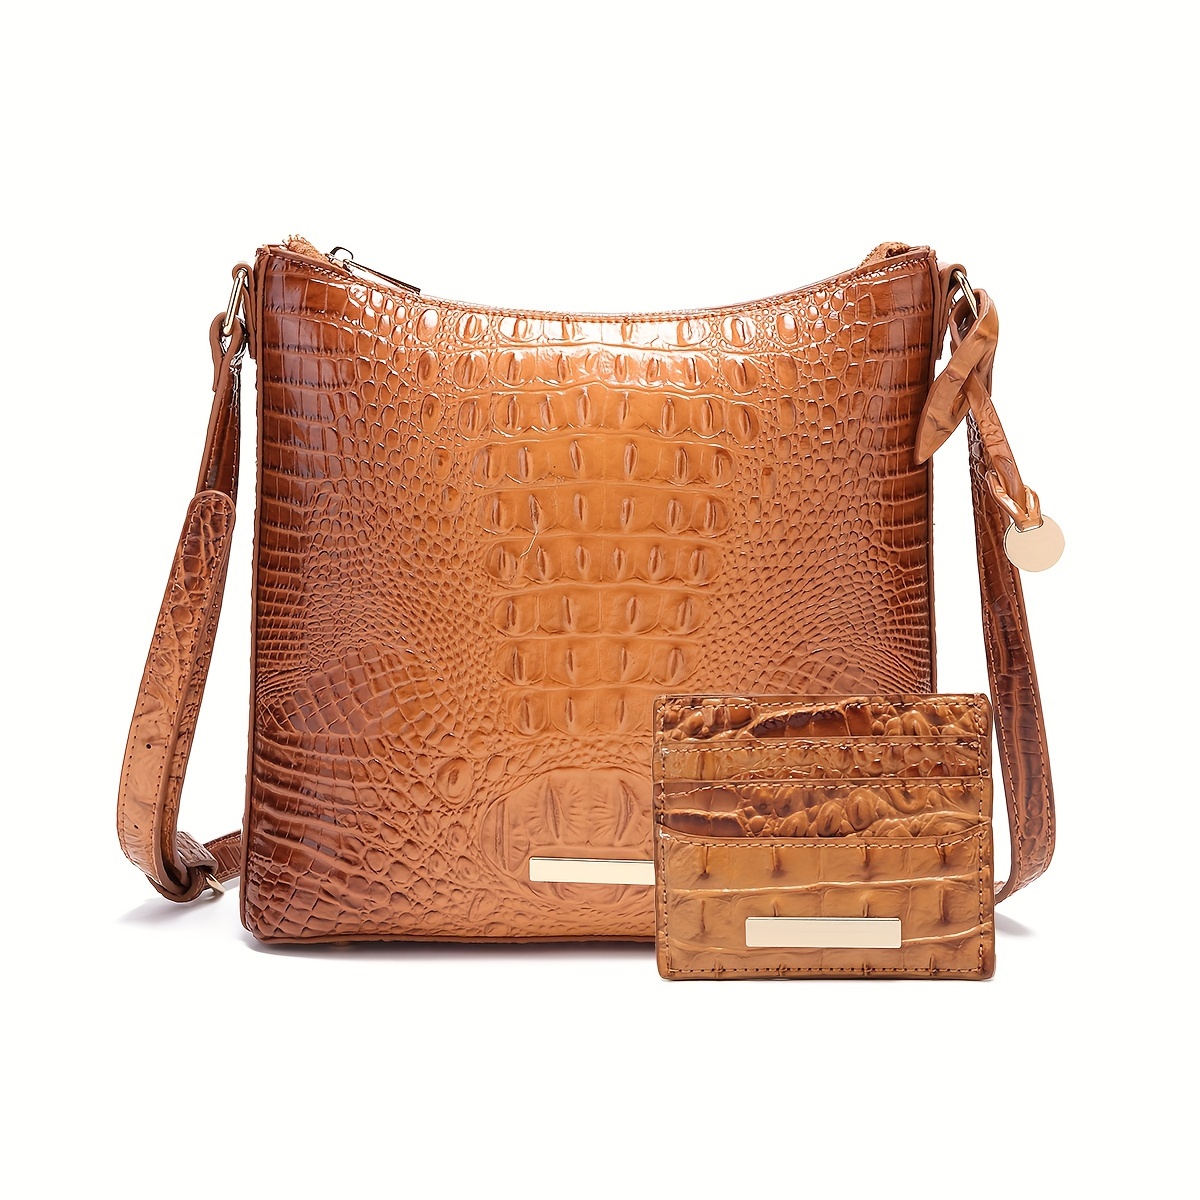 Cocopeaunt Women's Leather Handbag Set